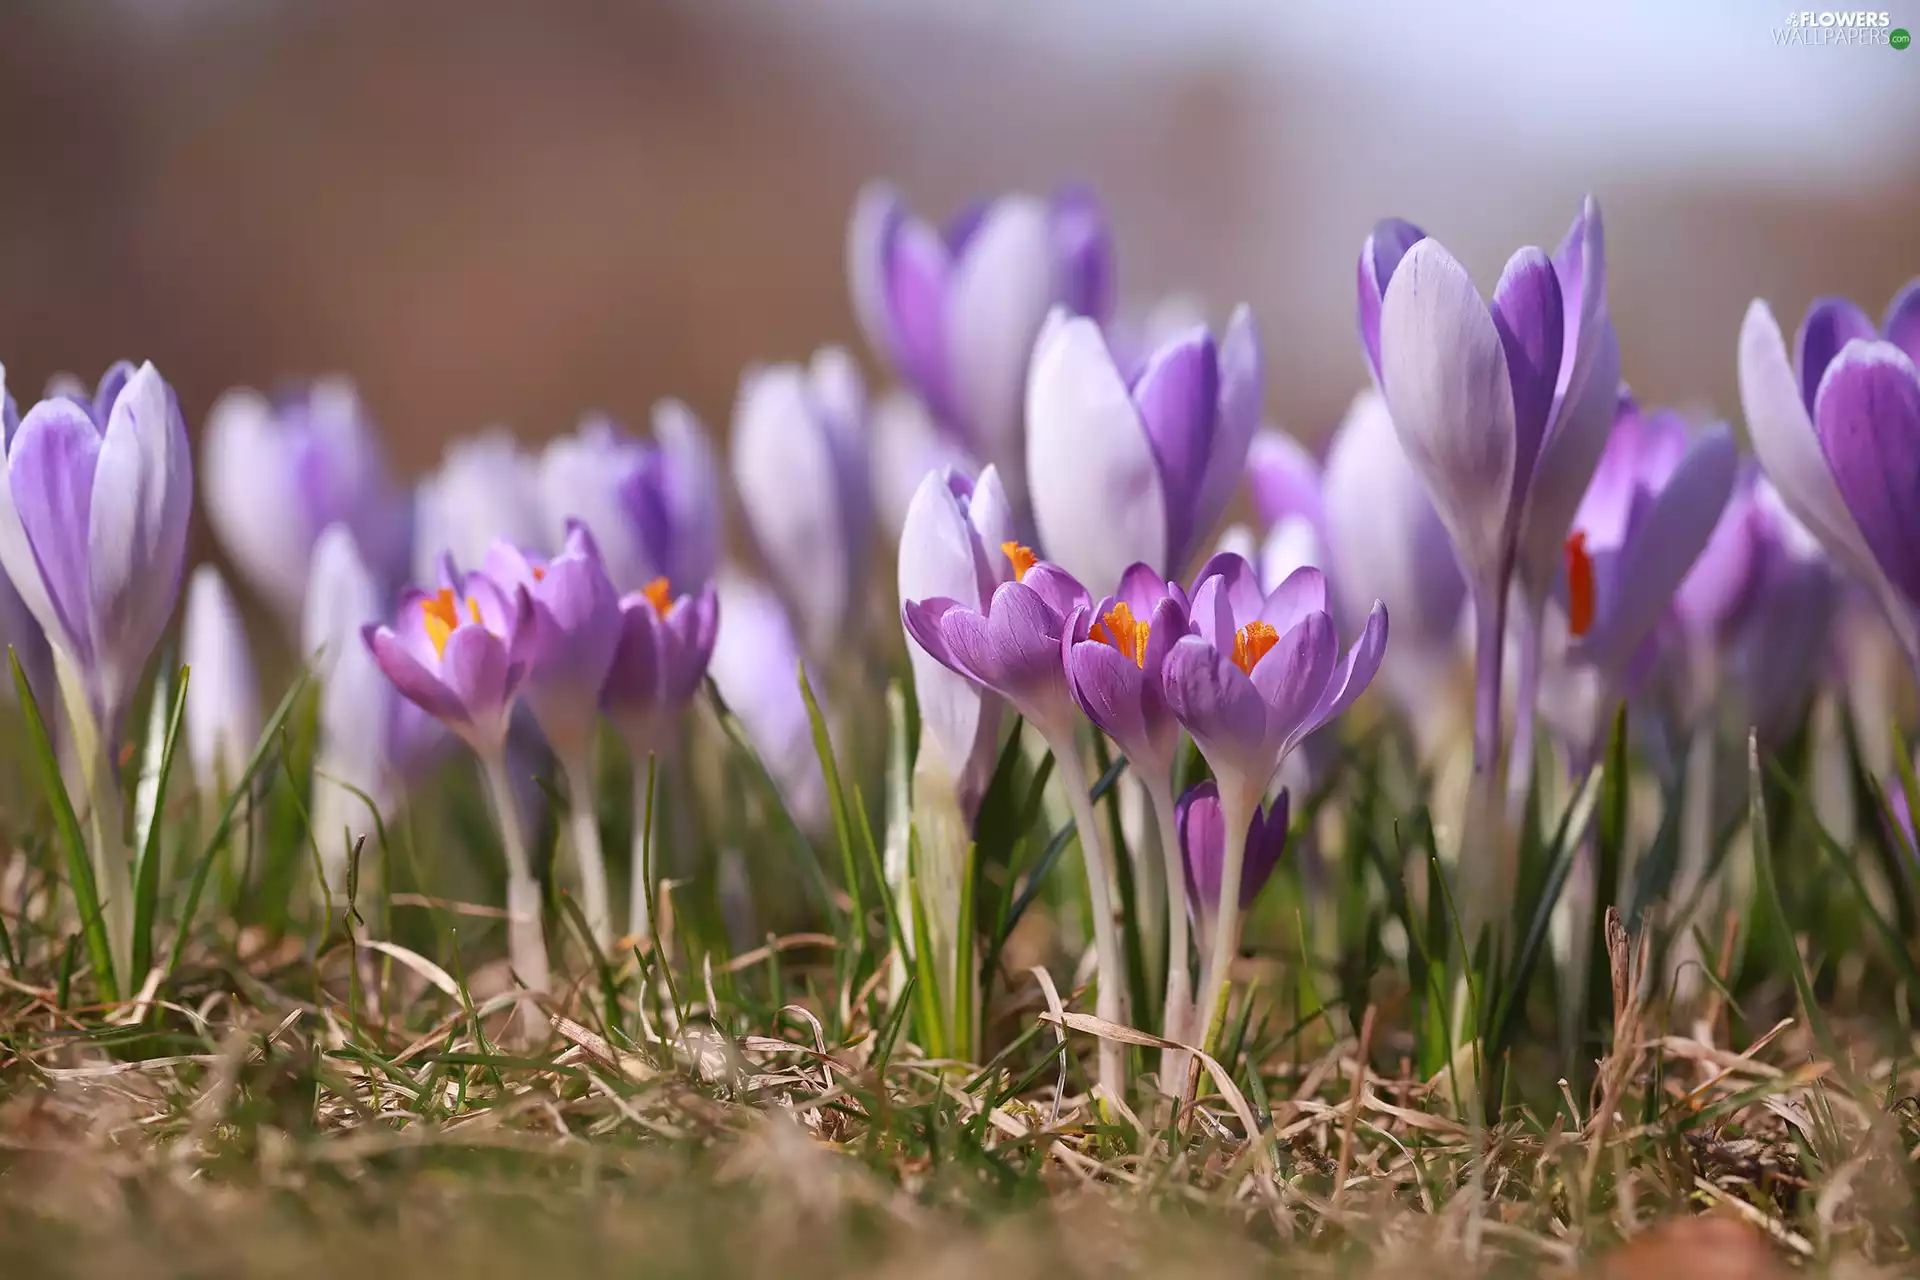 Flowers, Spring, lilac, crocuses, purple